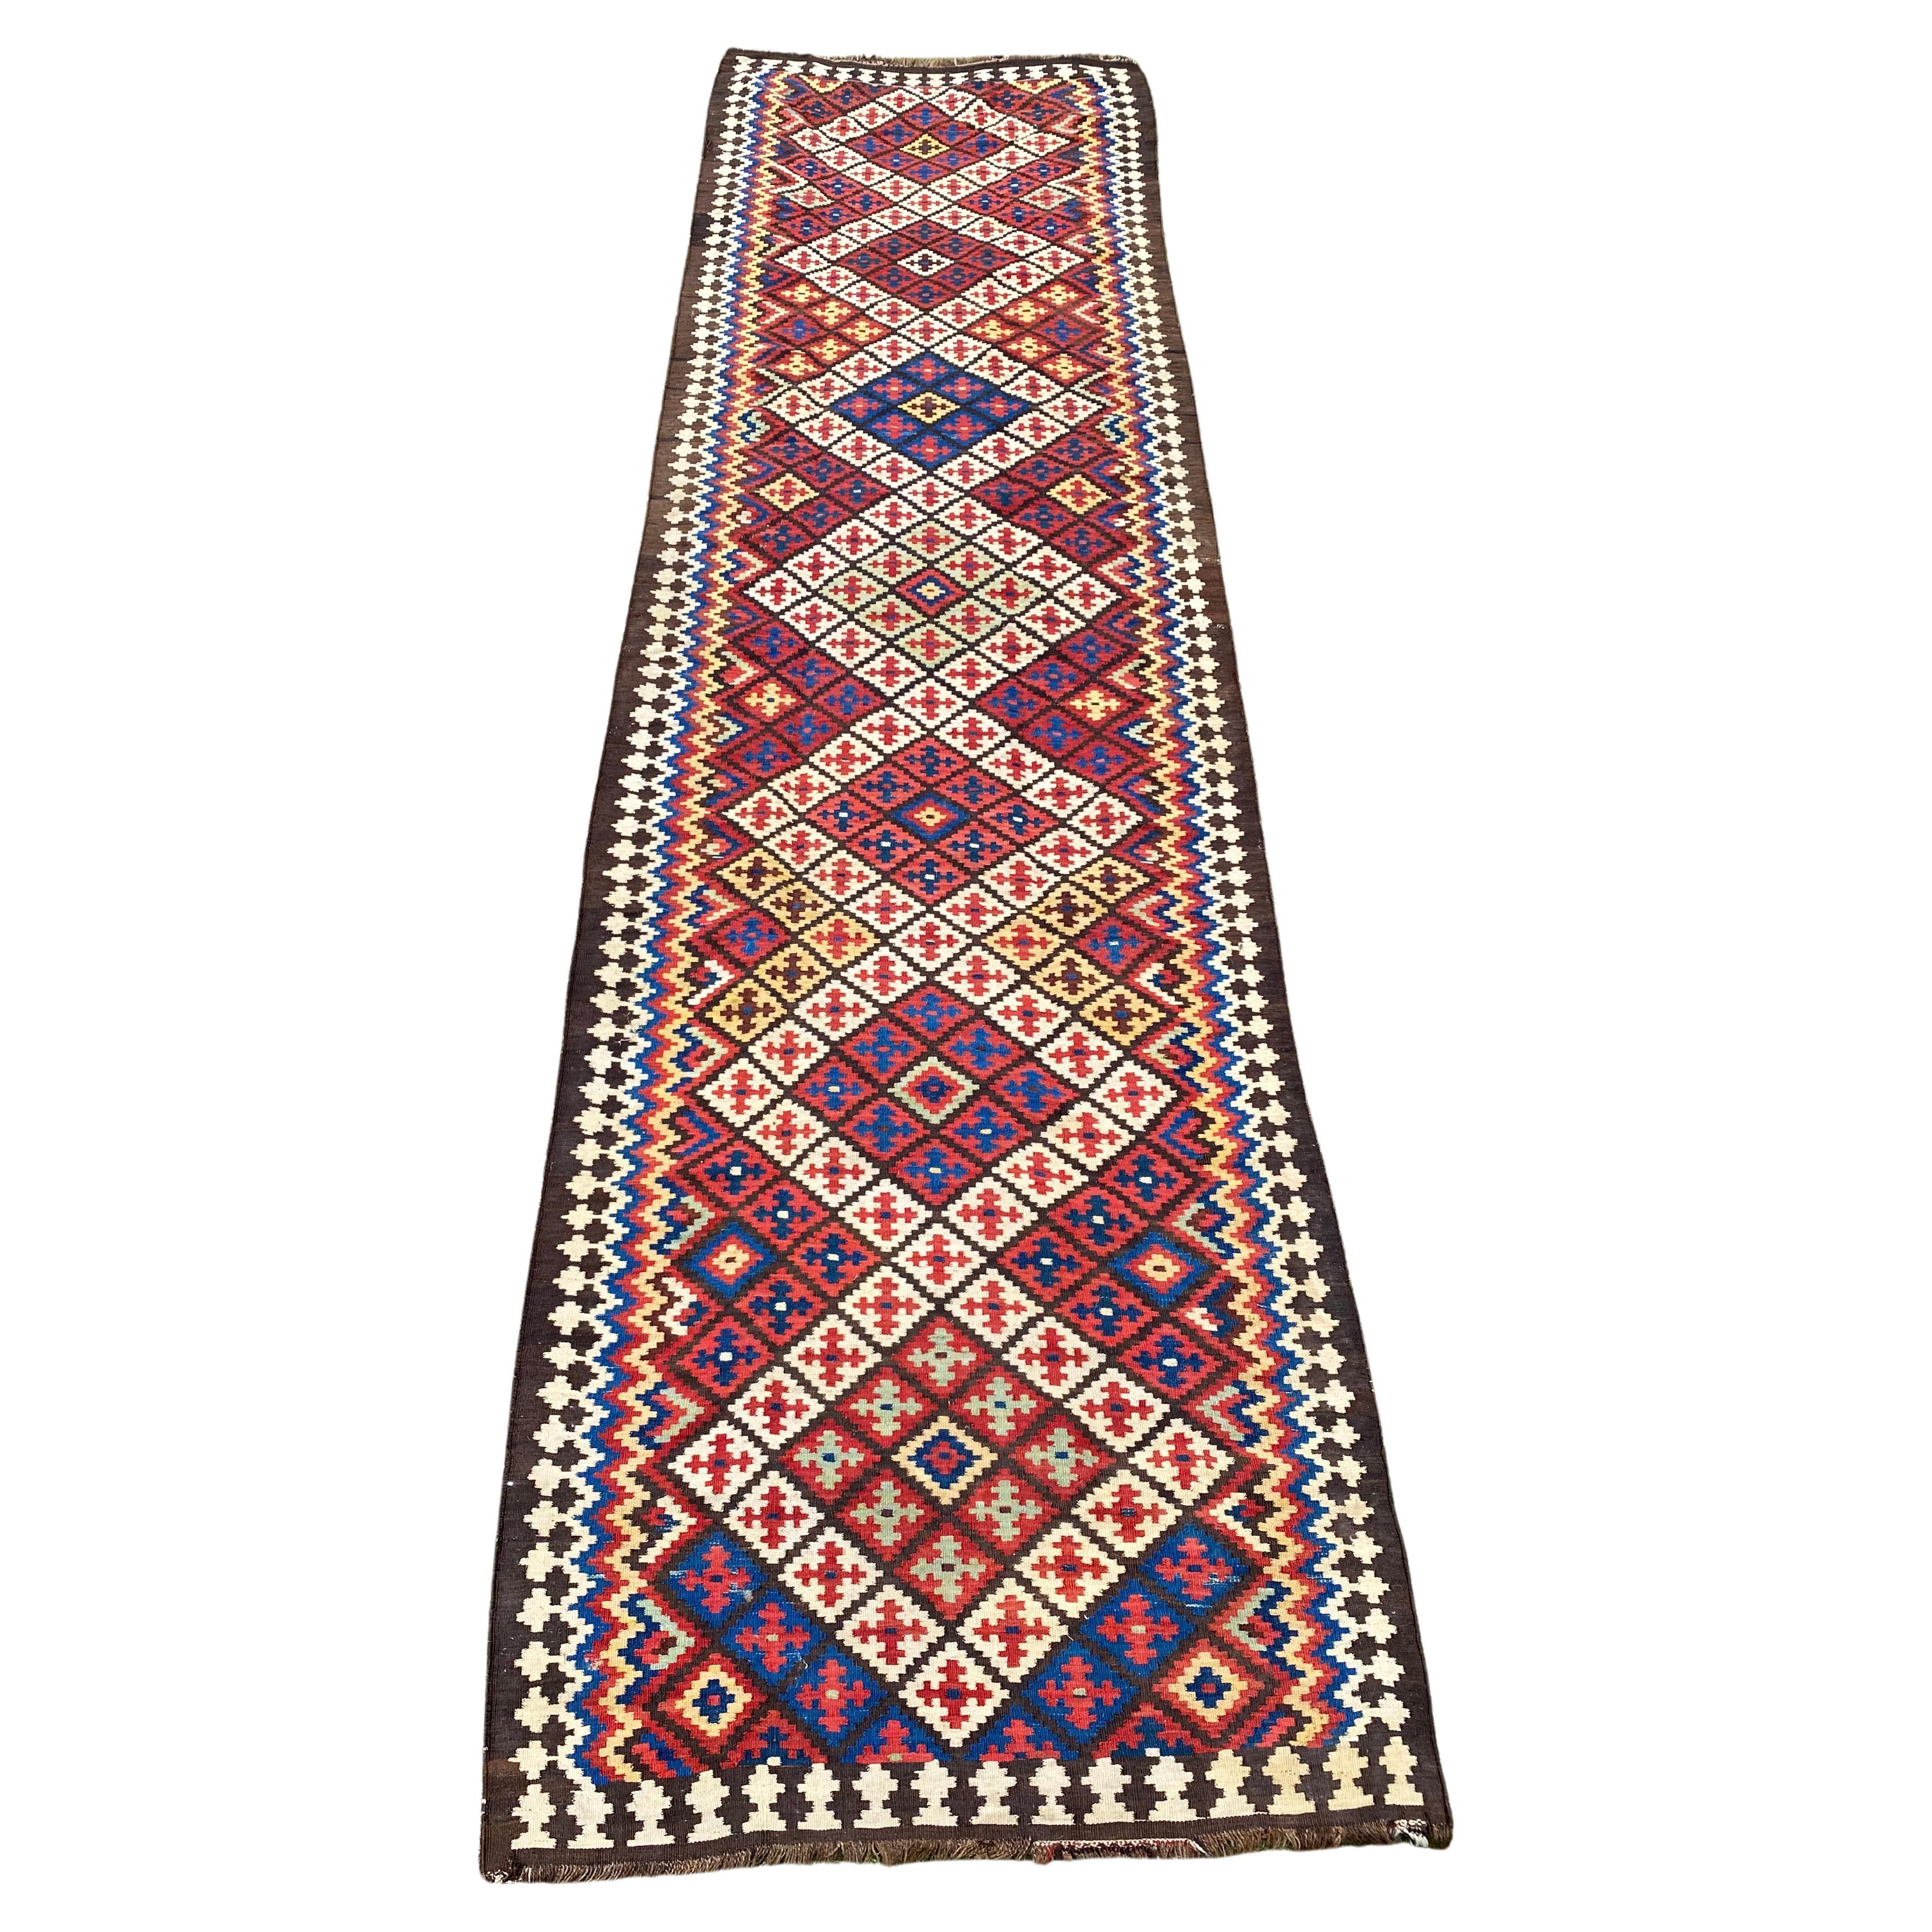 Uzbekistan Tartari Ranghi Kilim Rug from Wool, Early 20th Century